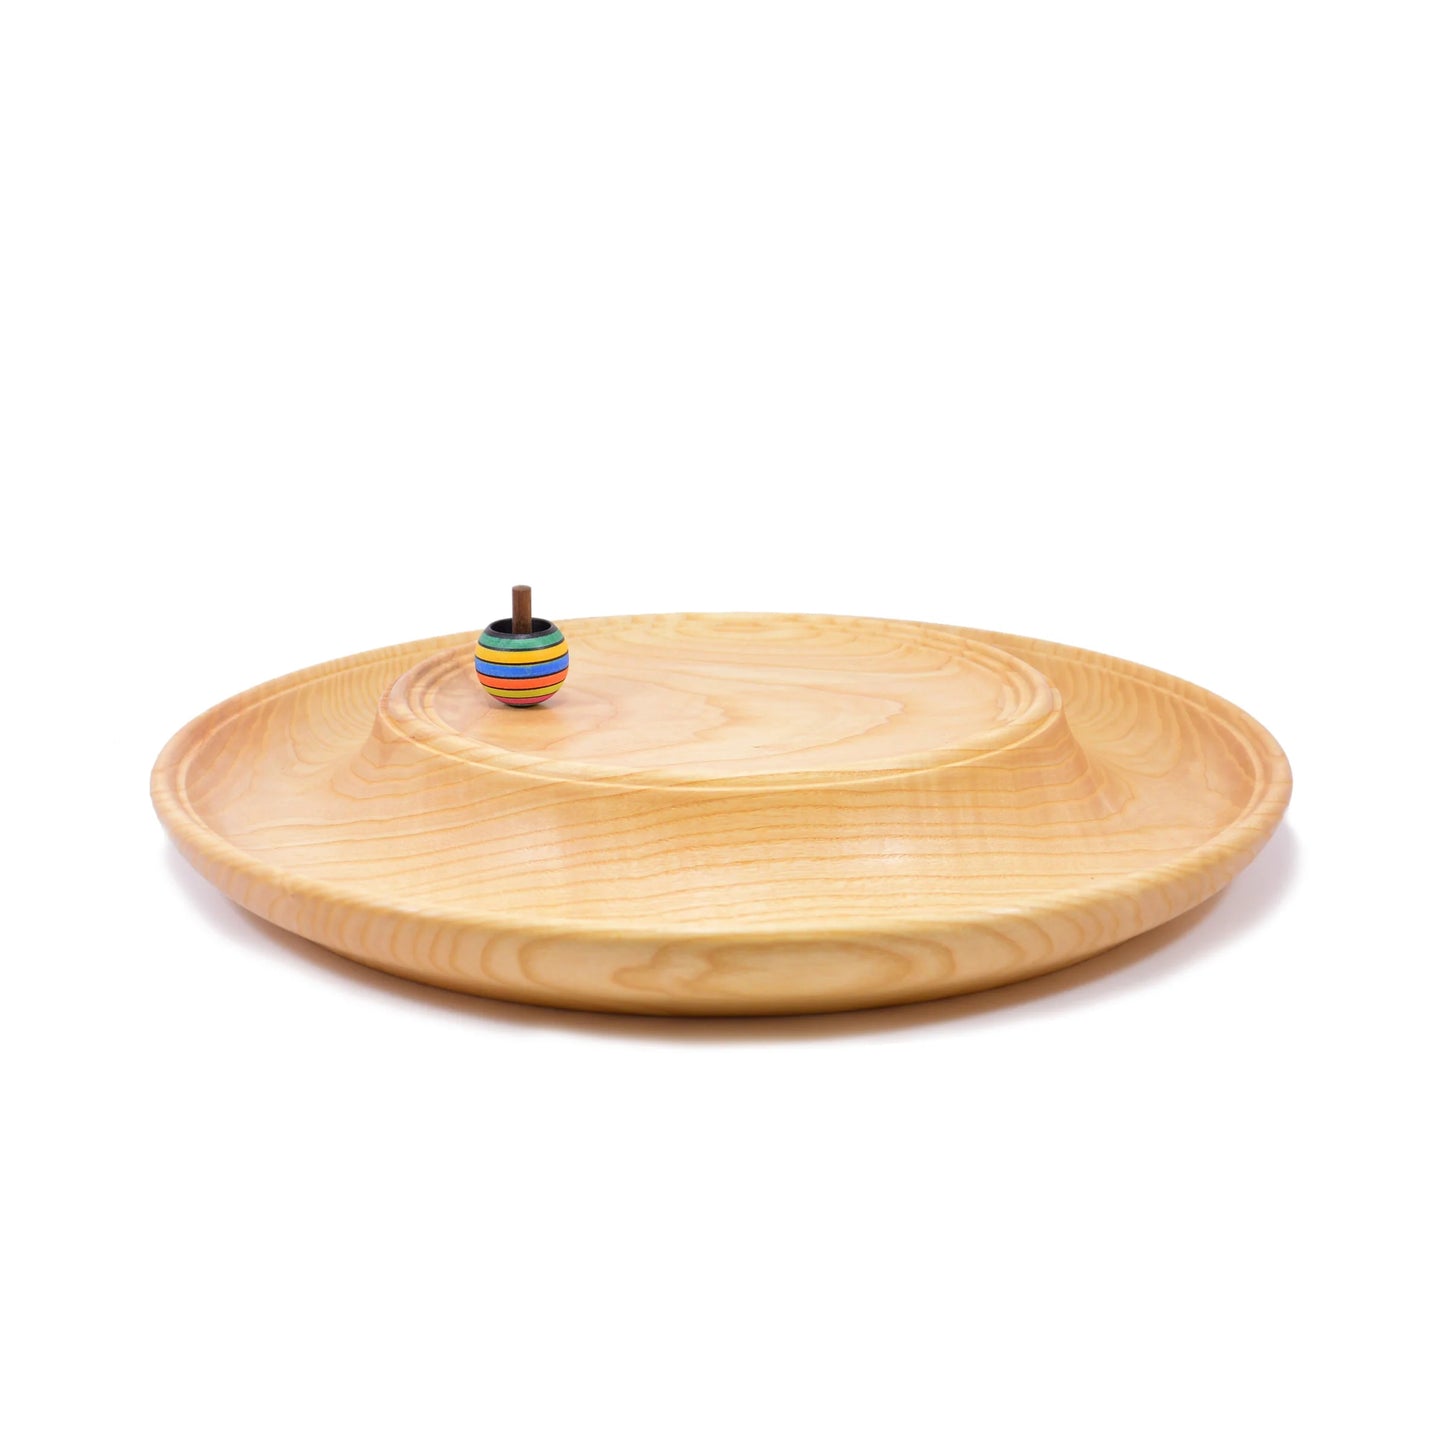 Mader Circular Platter 'Rondell' ~38 cm diameter